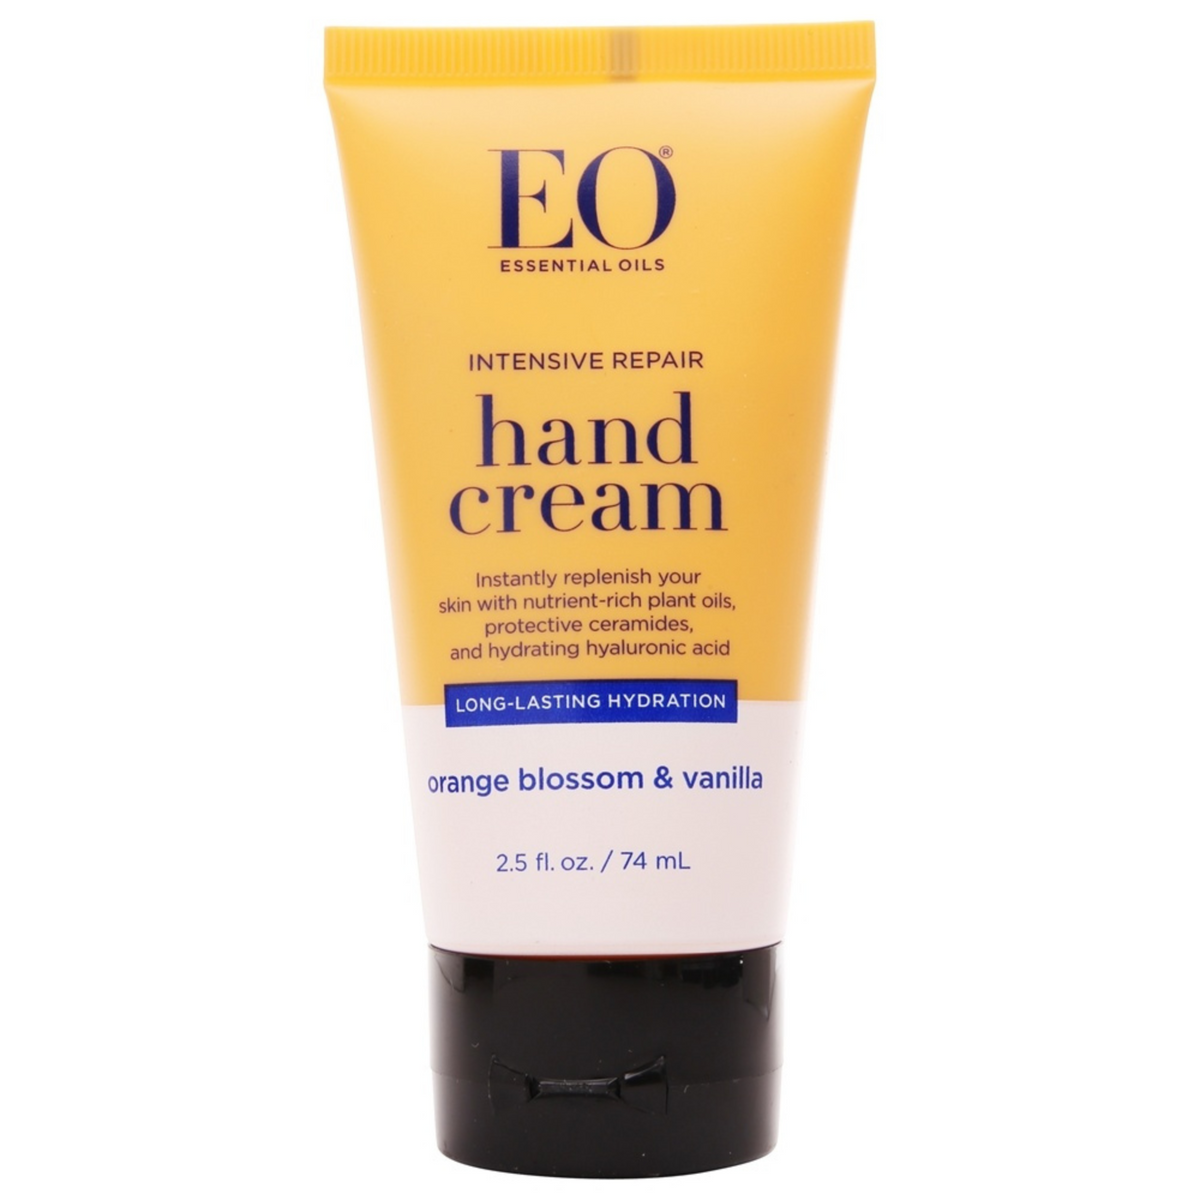 Primary Image of EO Orange Blossom & Vanilla Hand Cream (2.5 fl oz)